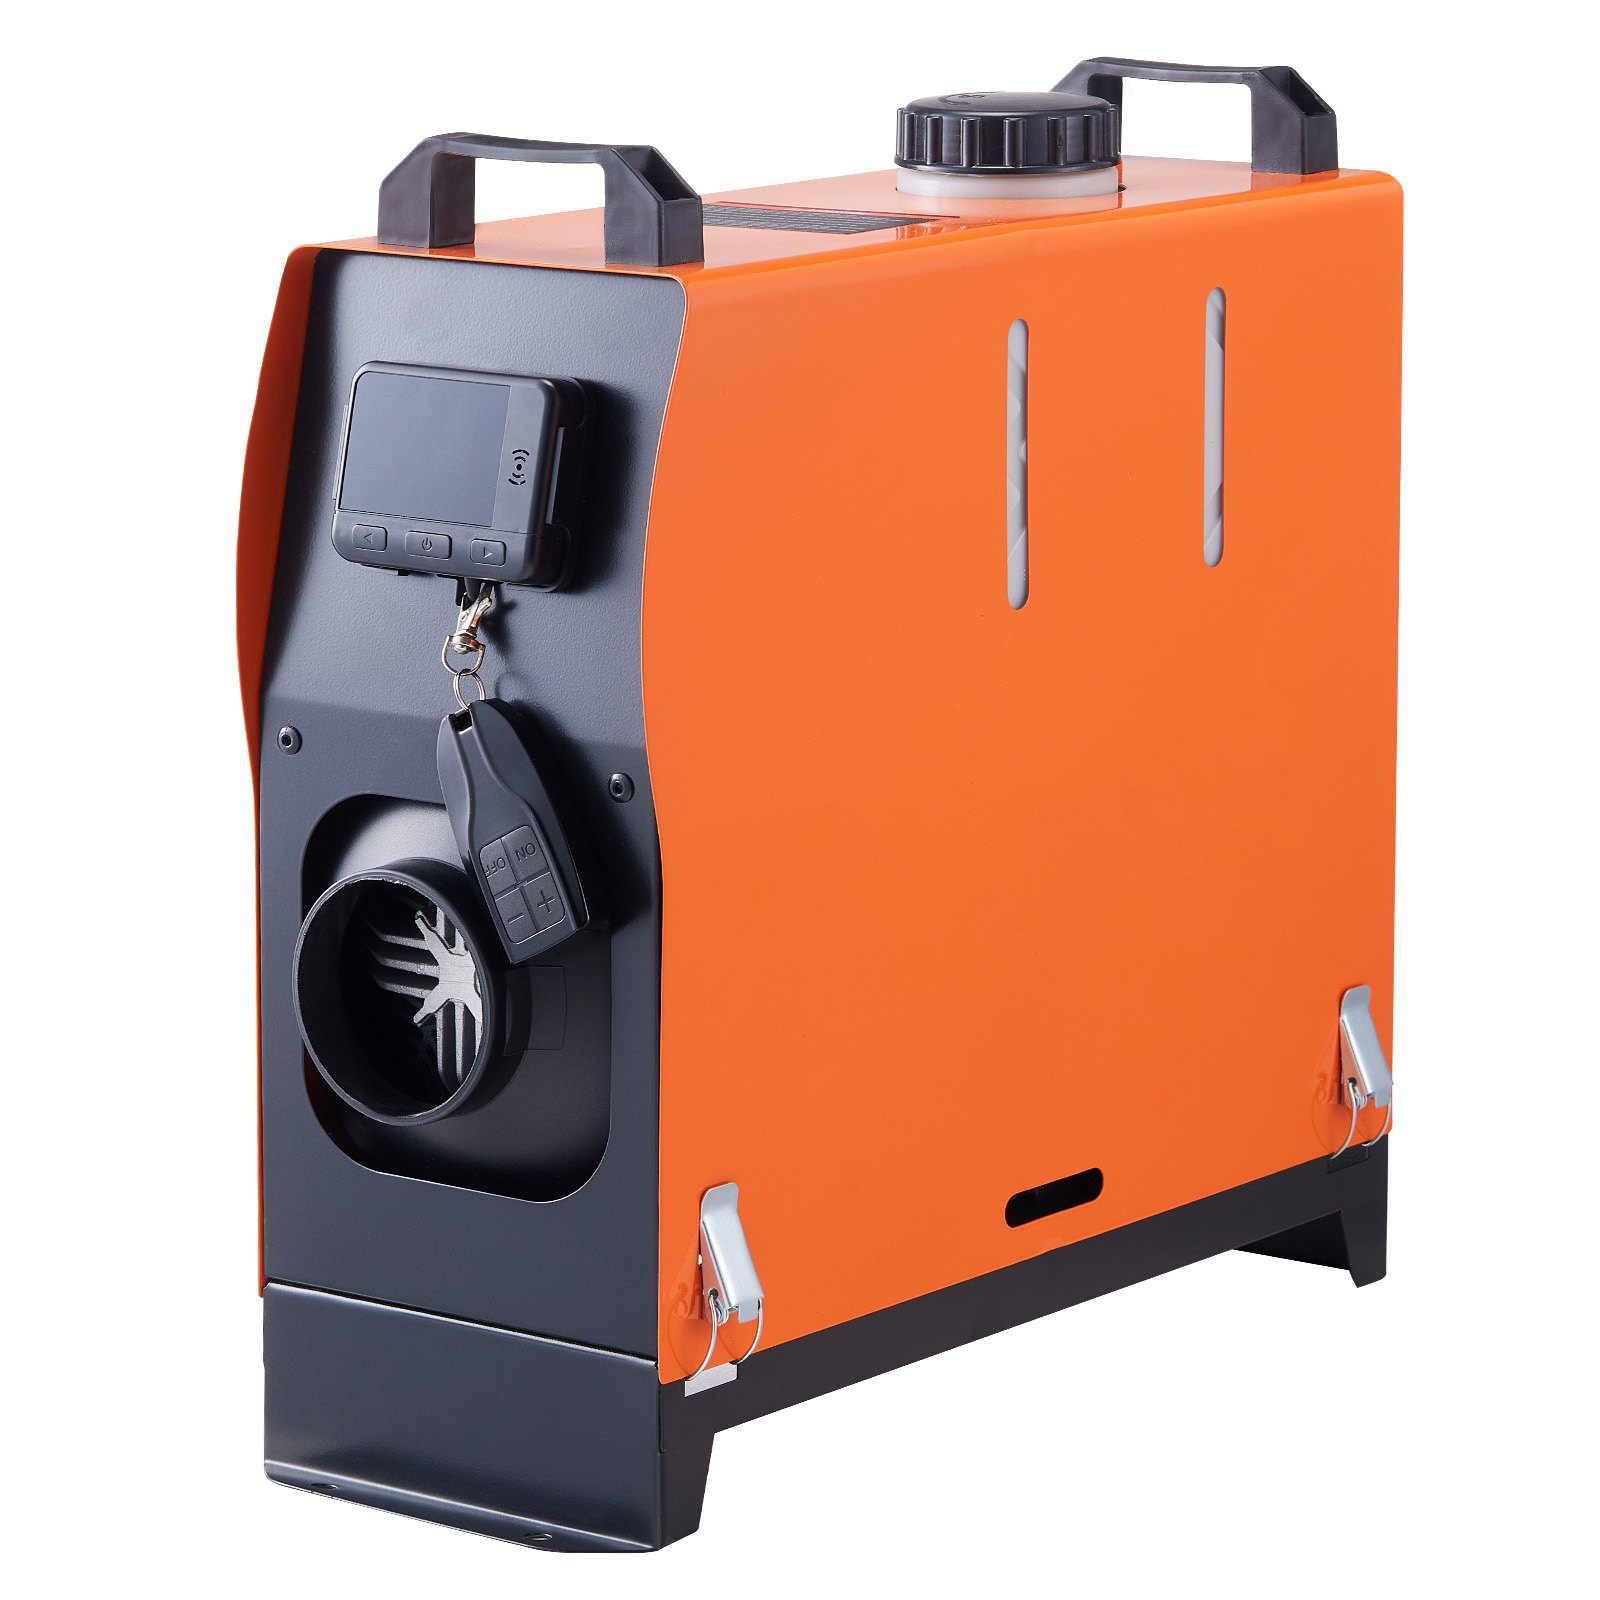 🎁2023-Christmas Hot Sale-70% OFF🎁Diesel Air Heater,Rapid Heating for RV Trailer Camper Van Boat And Indoors